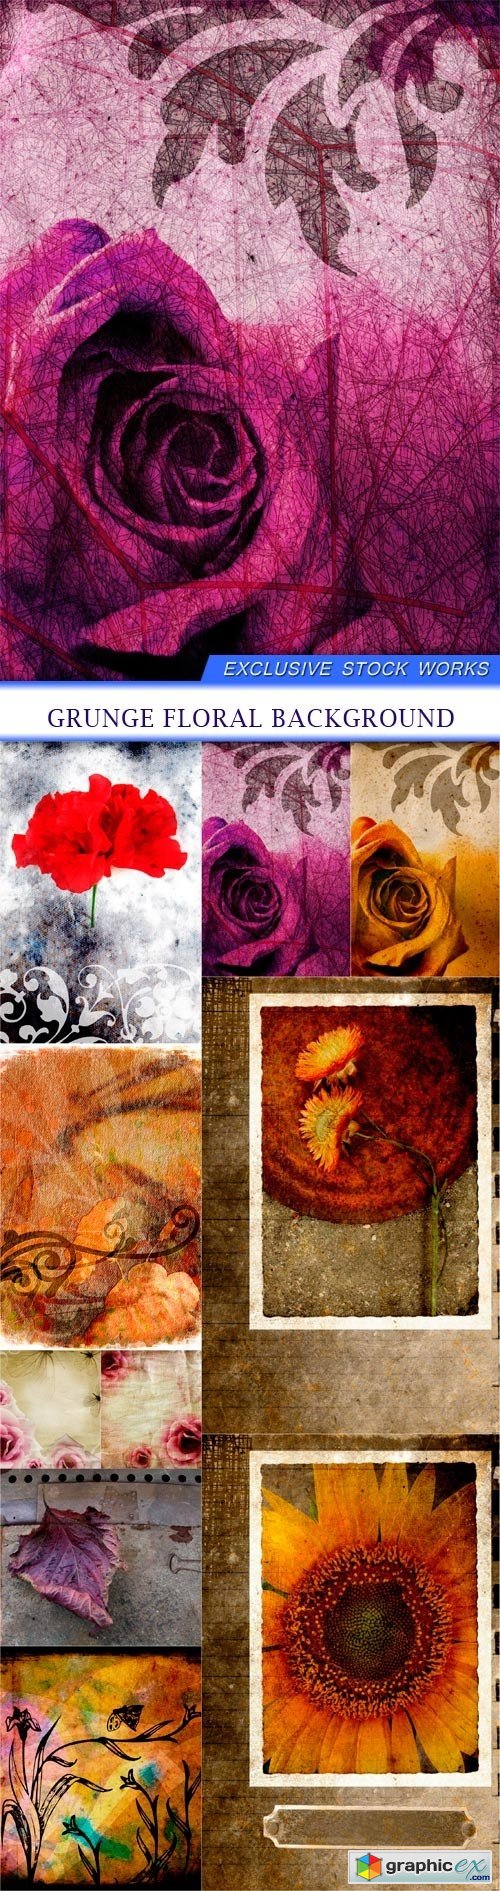 grunge floral background 10X JPEG